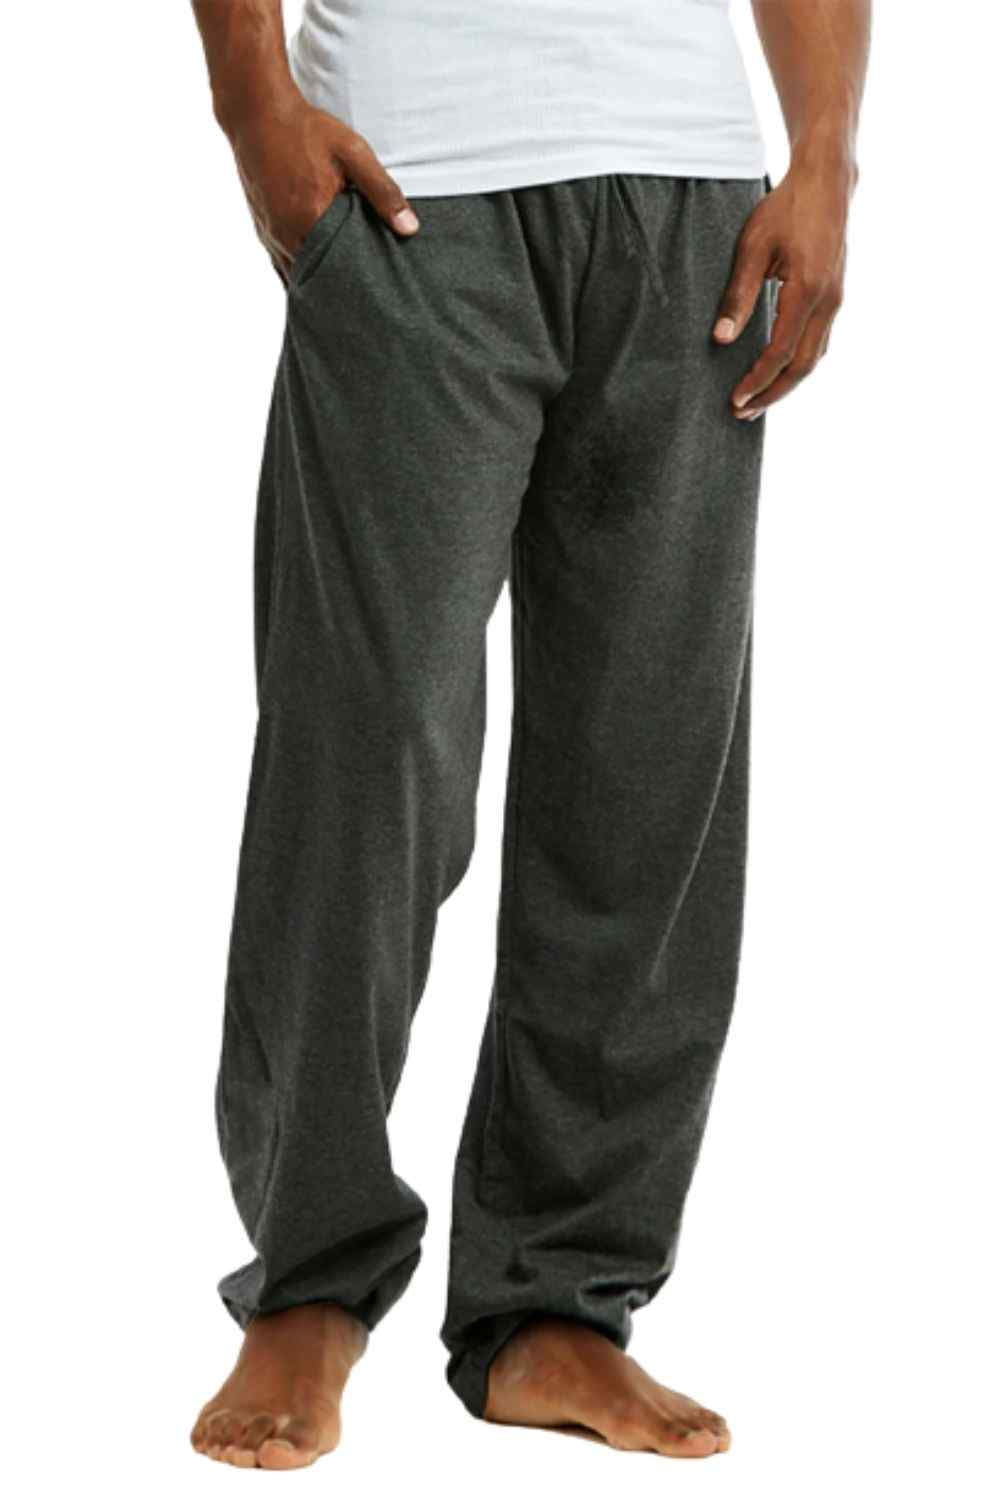 Men's Cotton Knitted Pajama Pants with Pocket Drawstring / Sleepwear ...